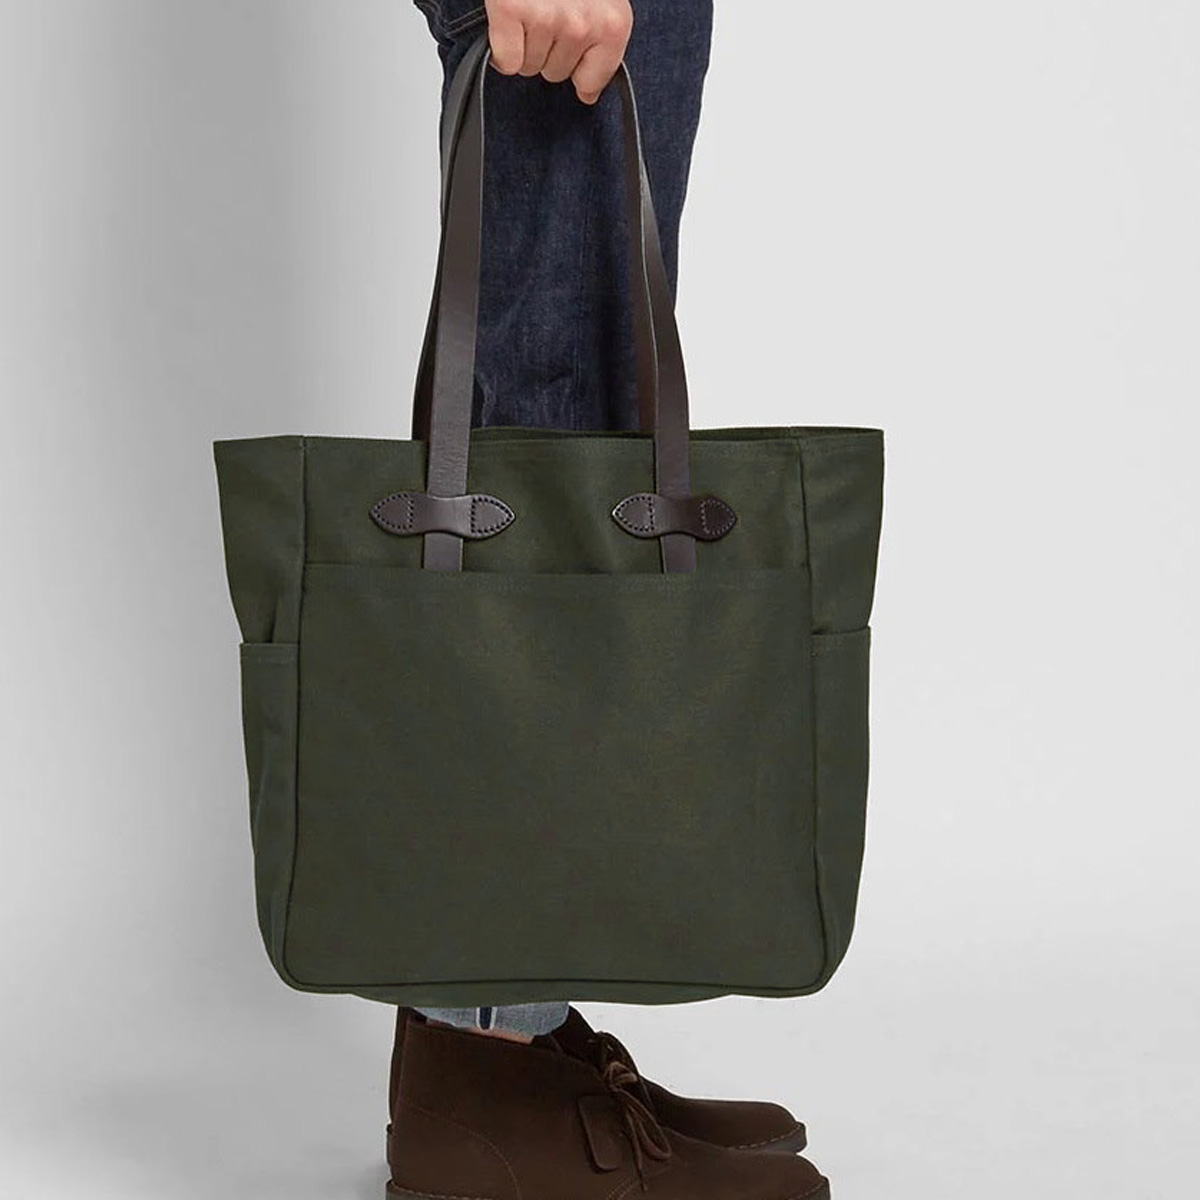 Filson Rugged Twill Tote Bag 11070260-Otter Green, kann direkt am Körper oder bequem über der Schulter getragen werden